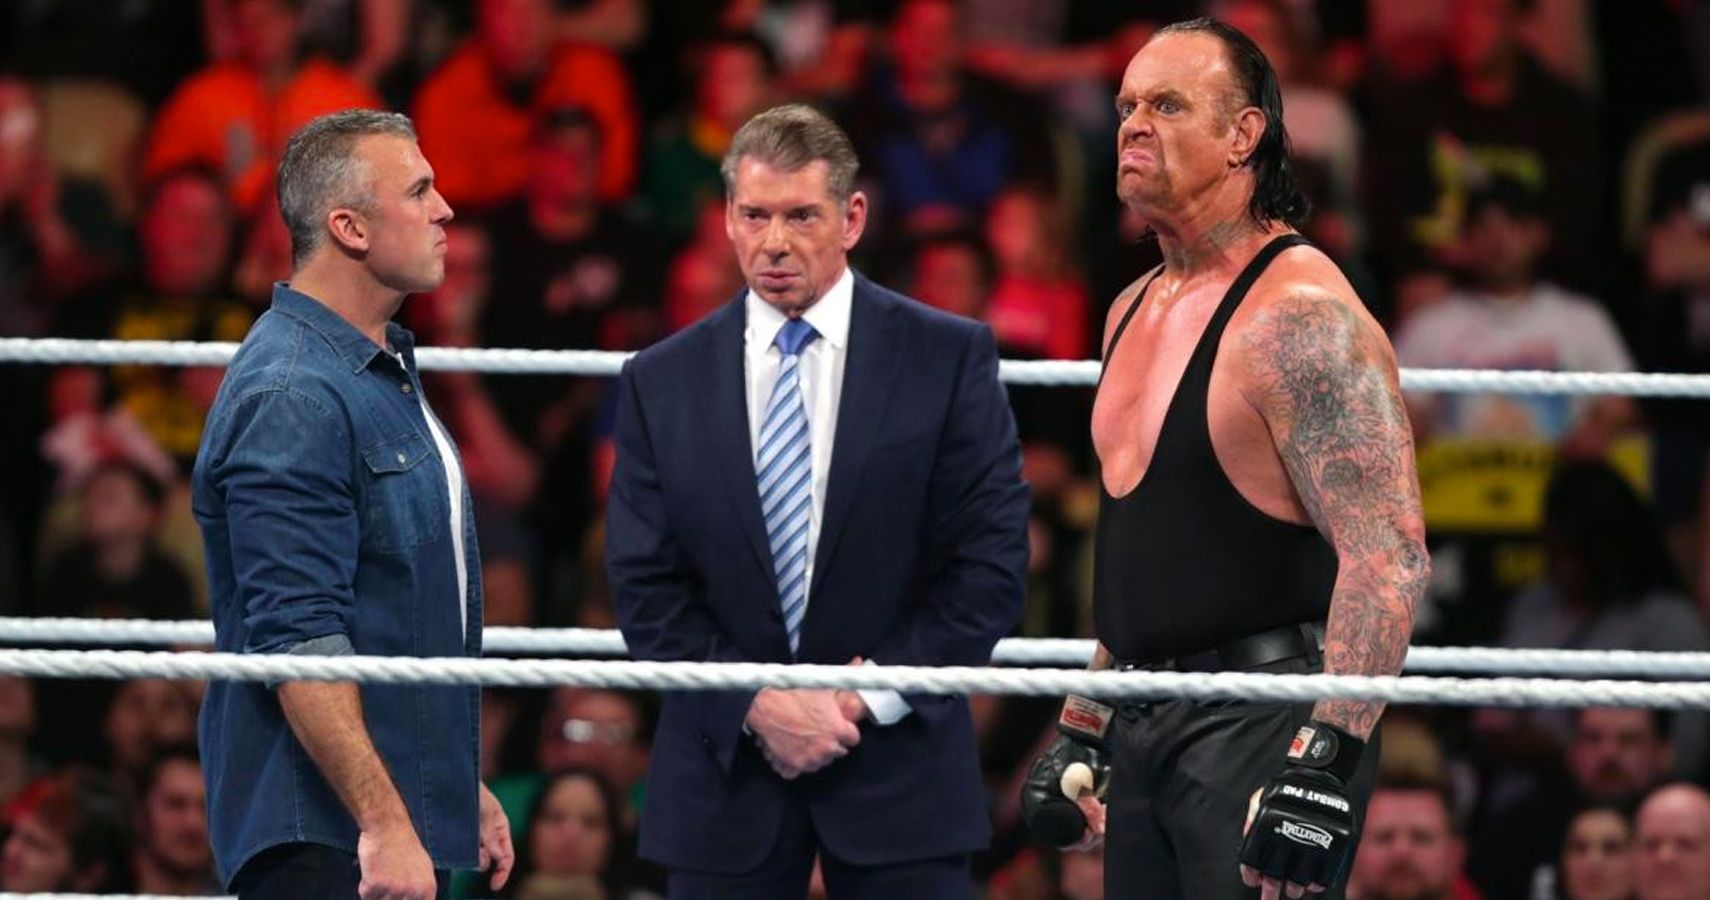 Undertaker and Shane McMahon